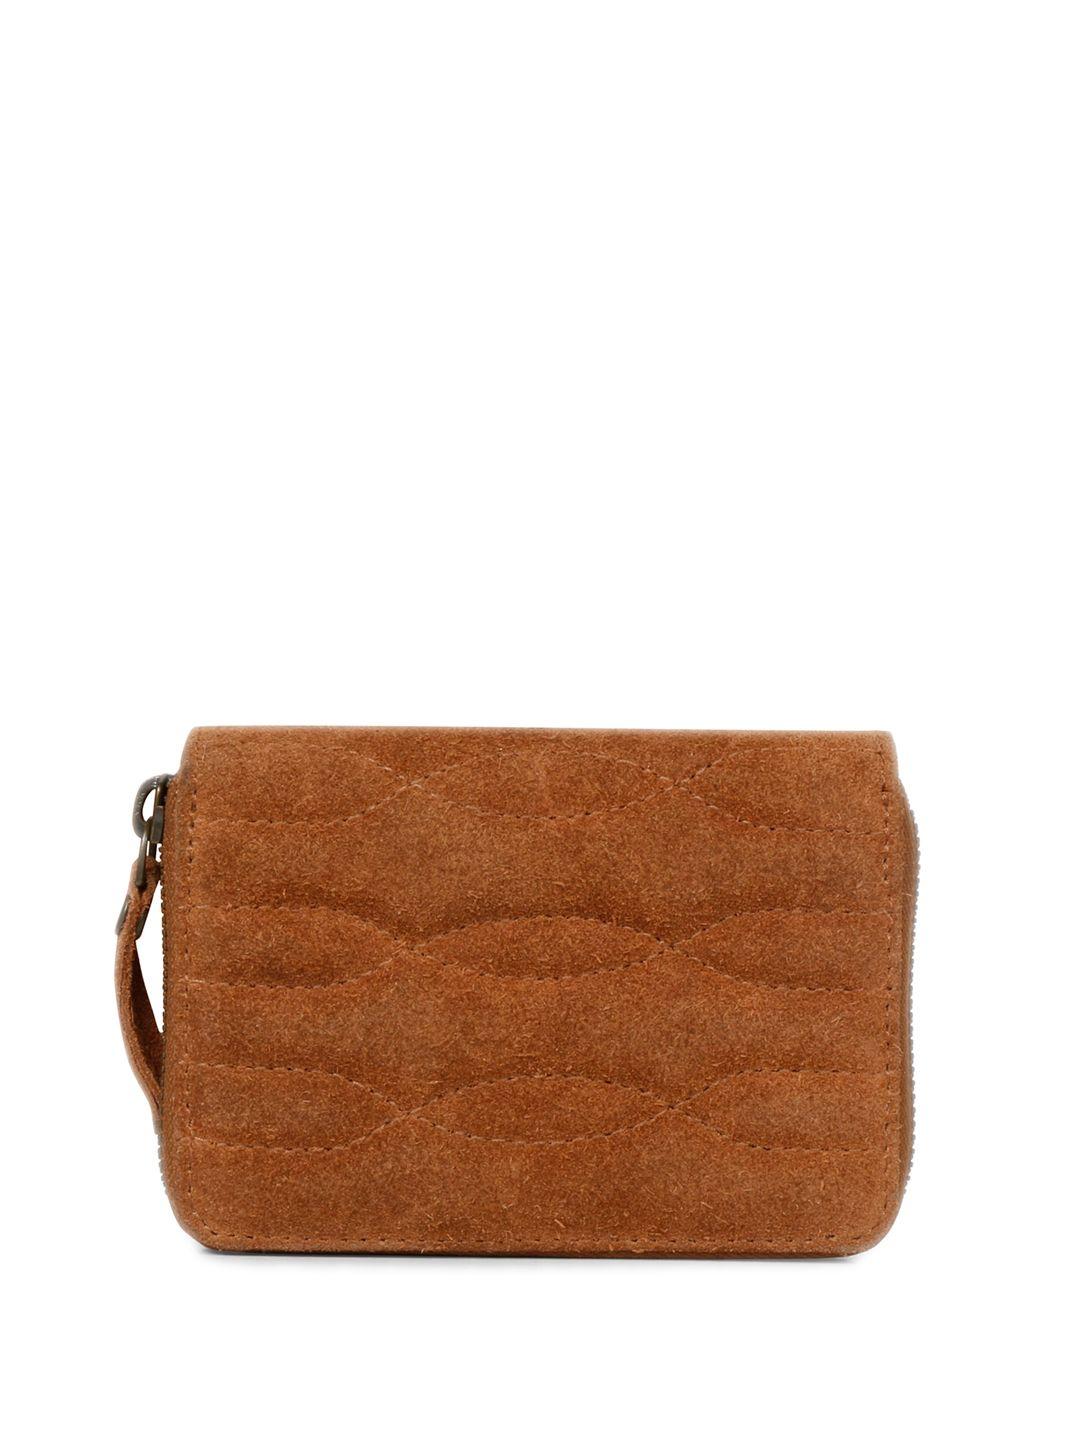 saint g tan leather textured purse